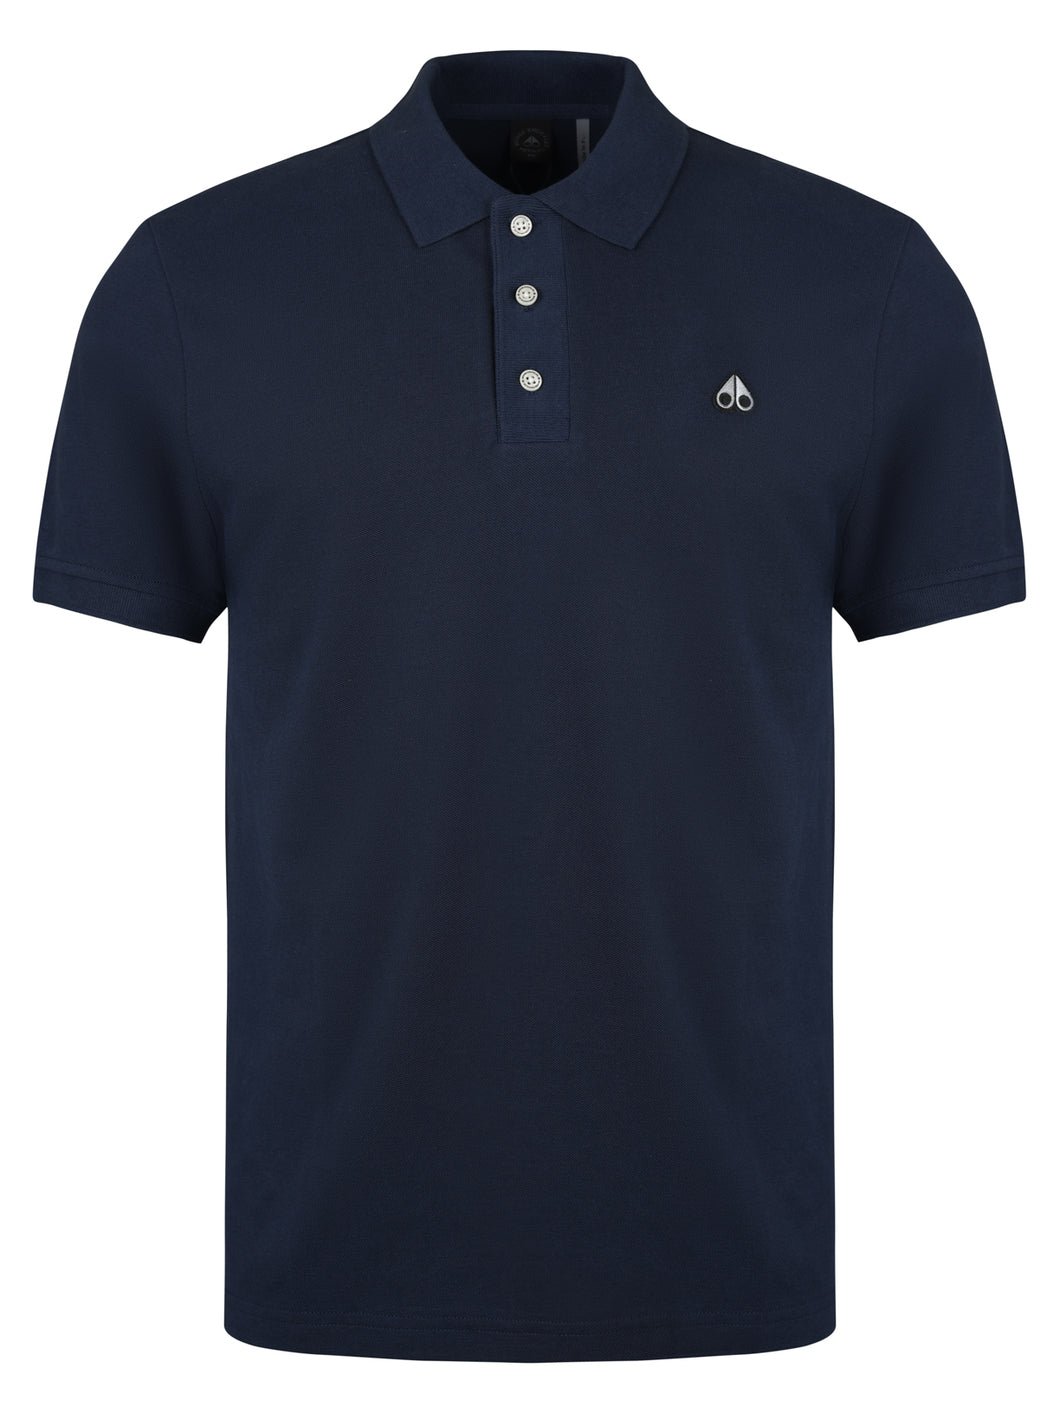 Moose Knuckles Logo Polo Shirt Navy